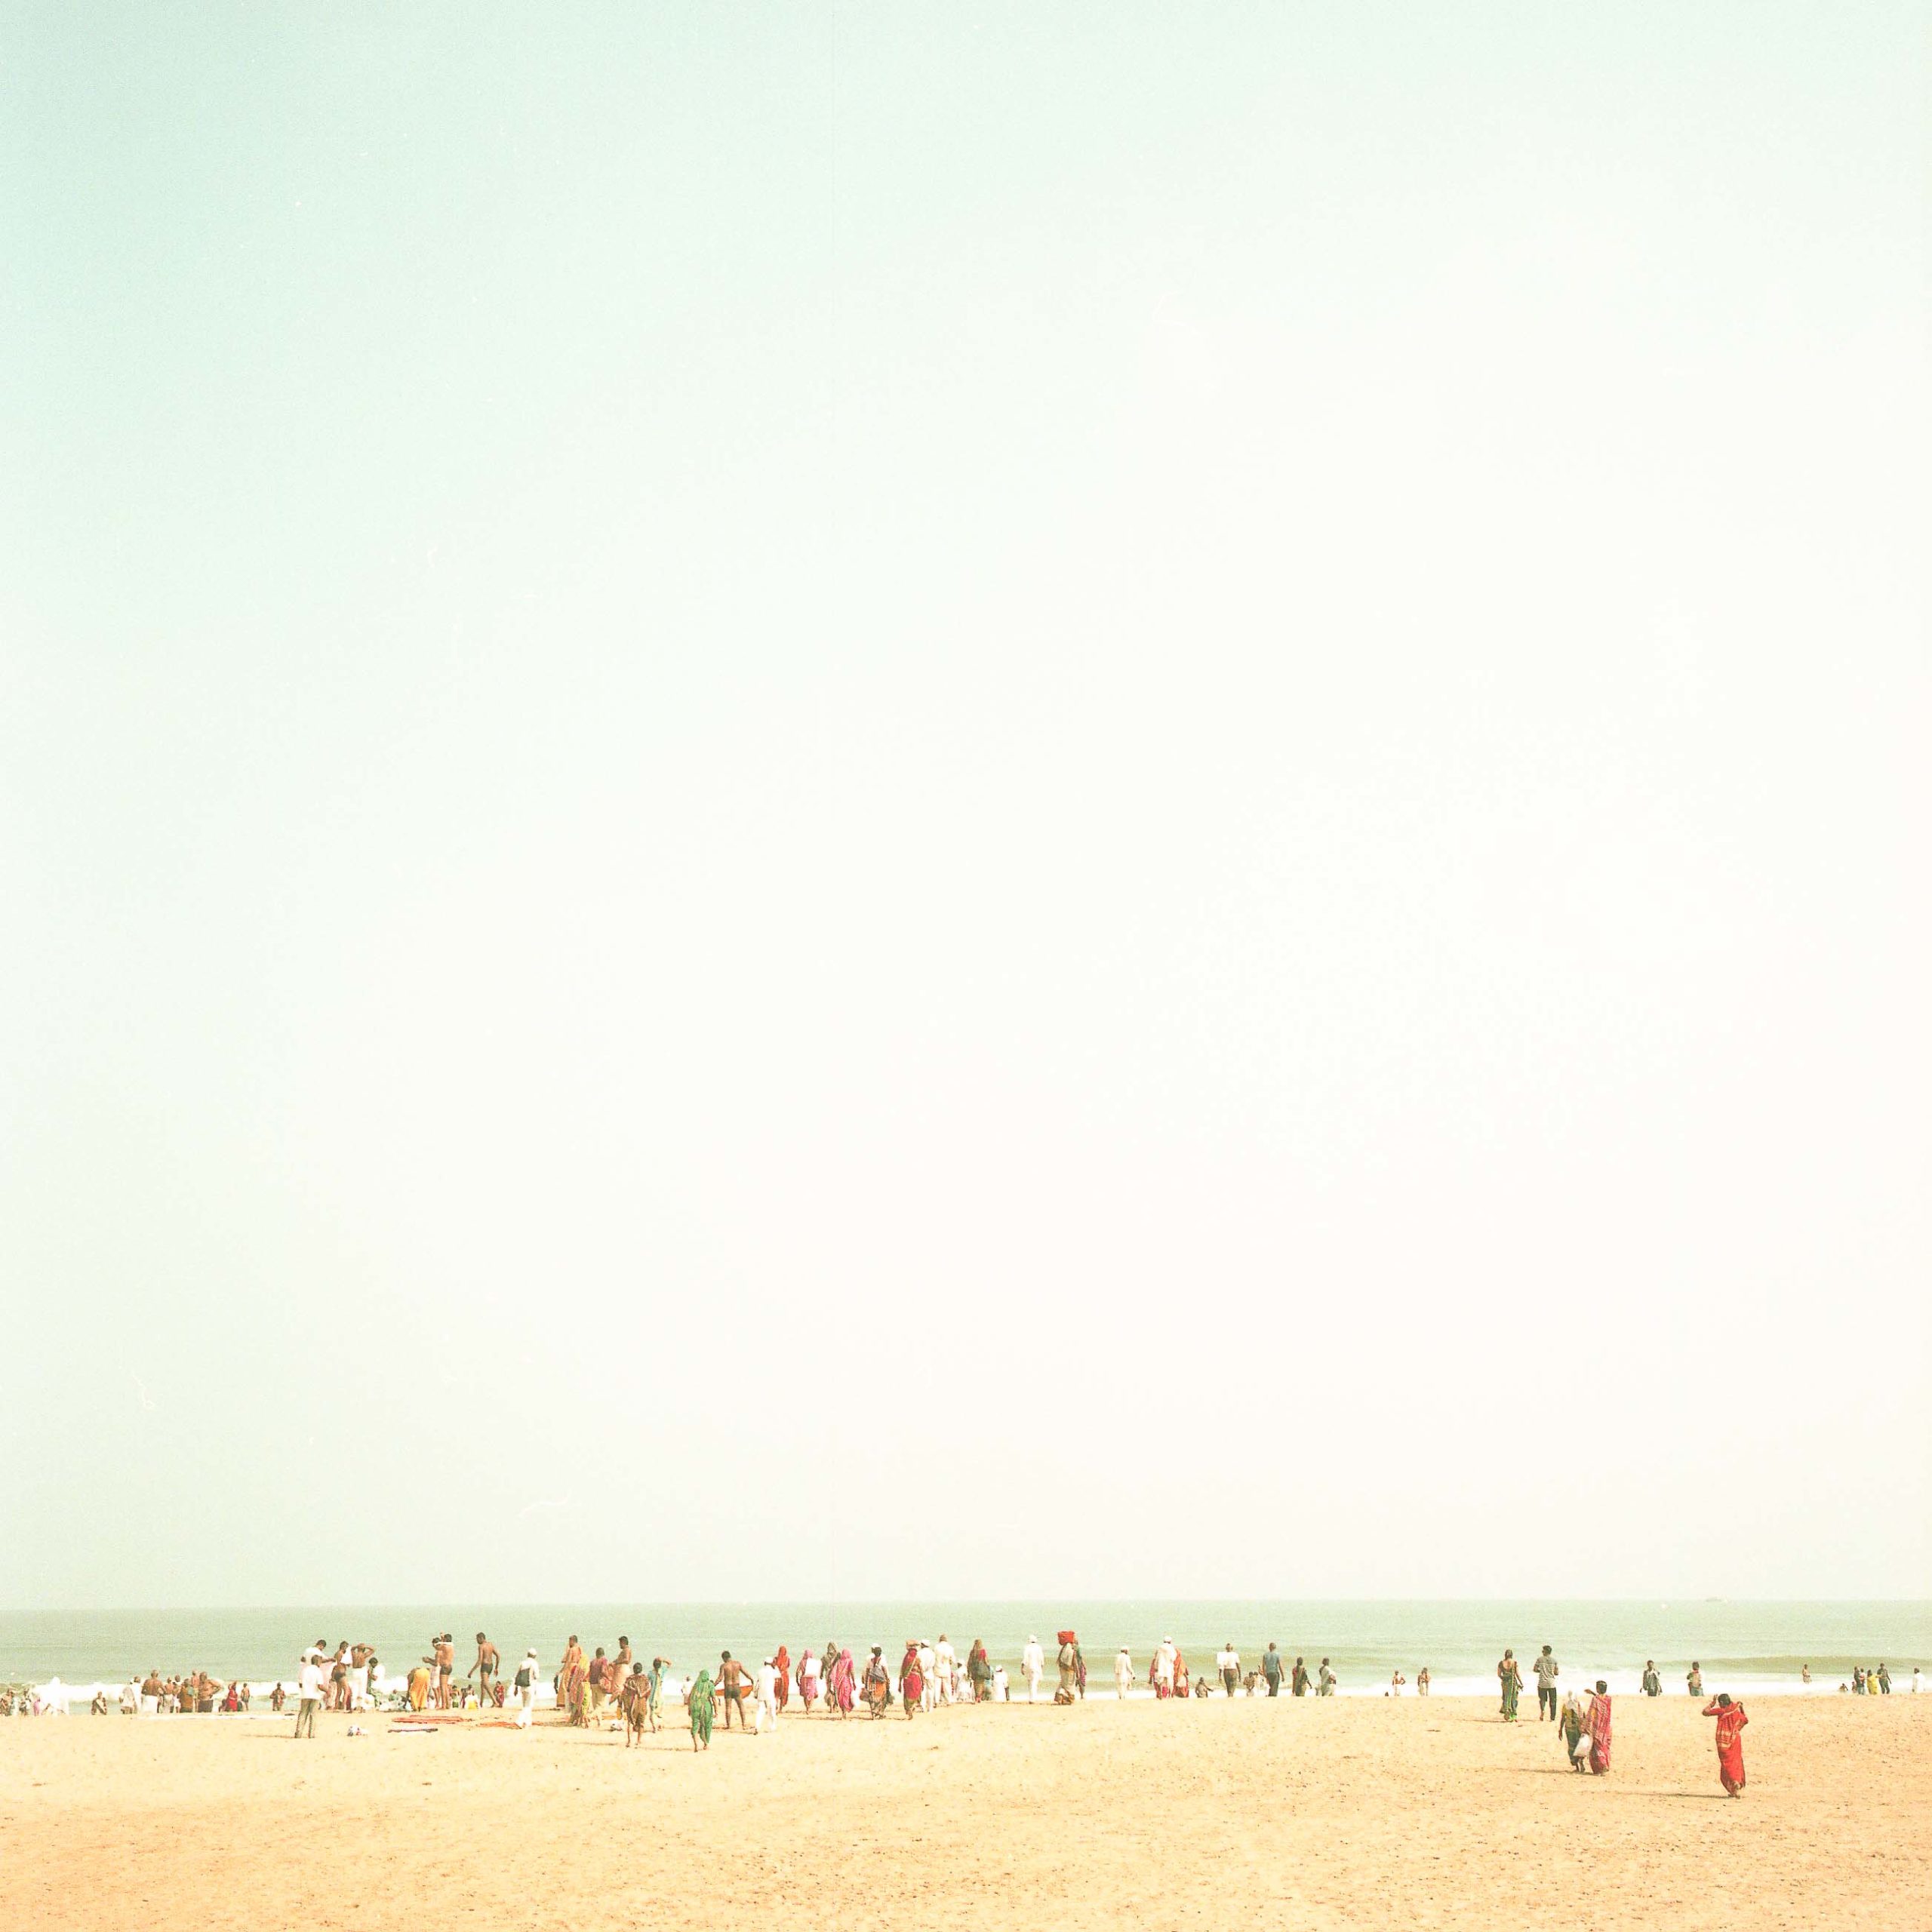 people at the beach, India, fine art photograph, seascape, travel photography, fotografo, film photography, raffaele ferrari photography